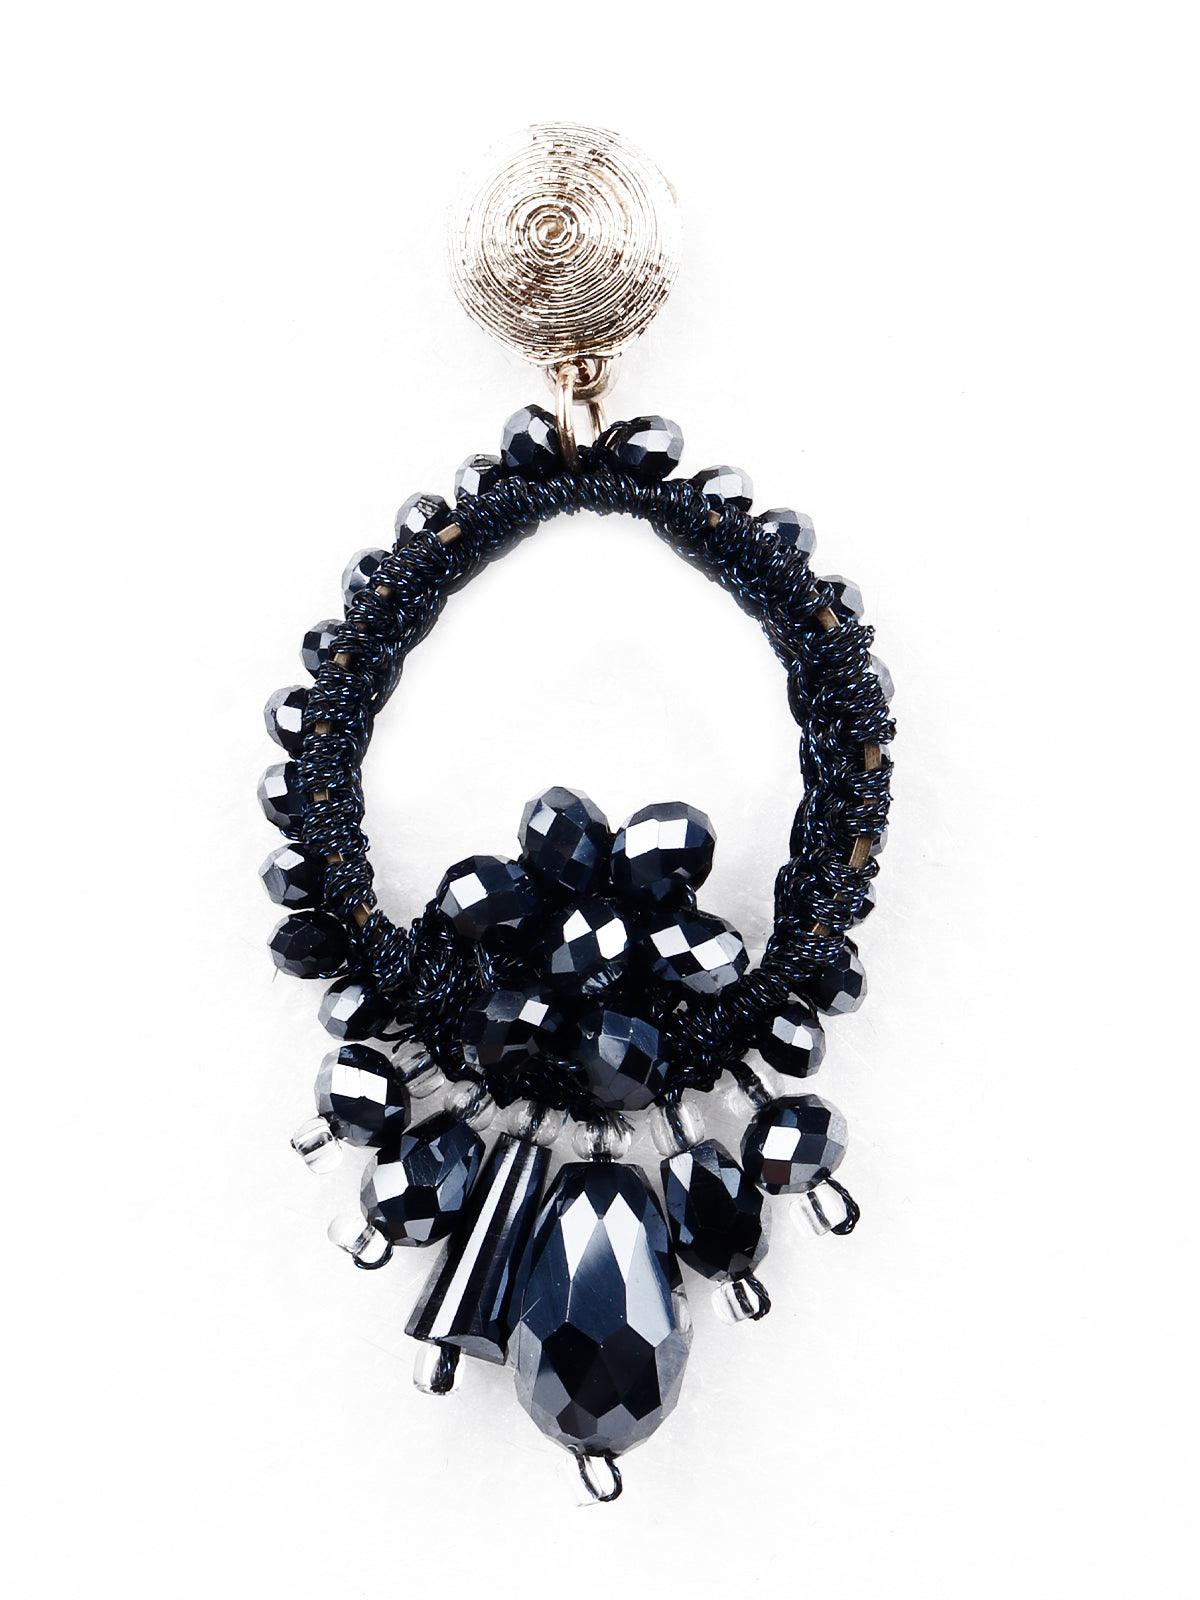 Women's Elegant Navy Blue Embellished Statement Earrings - Odette